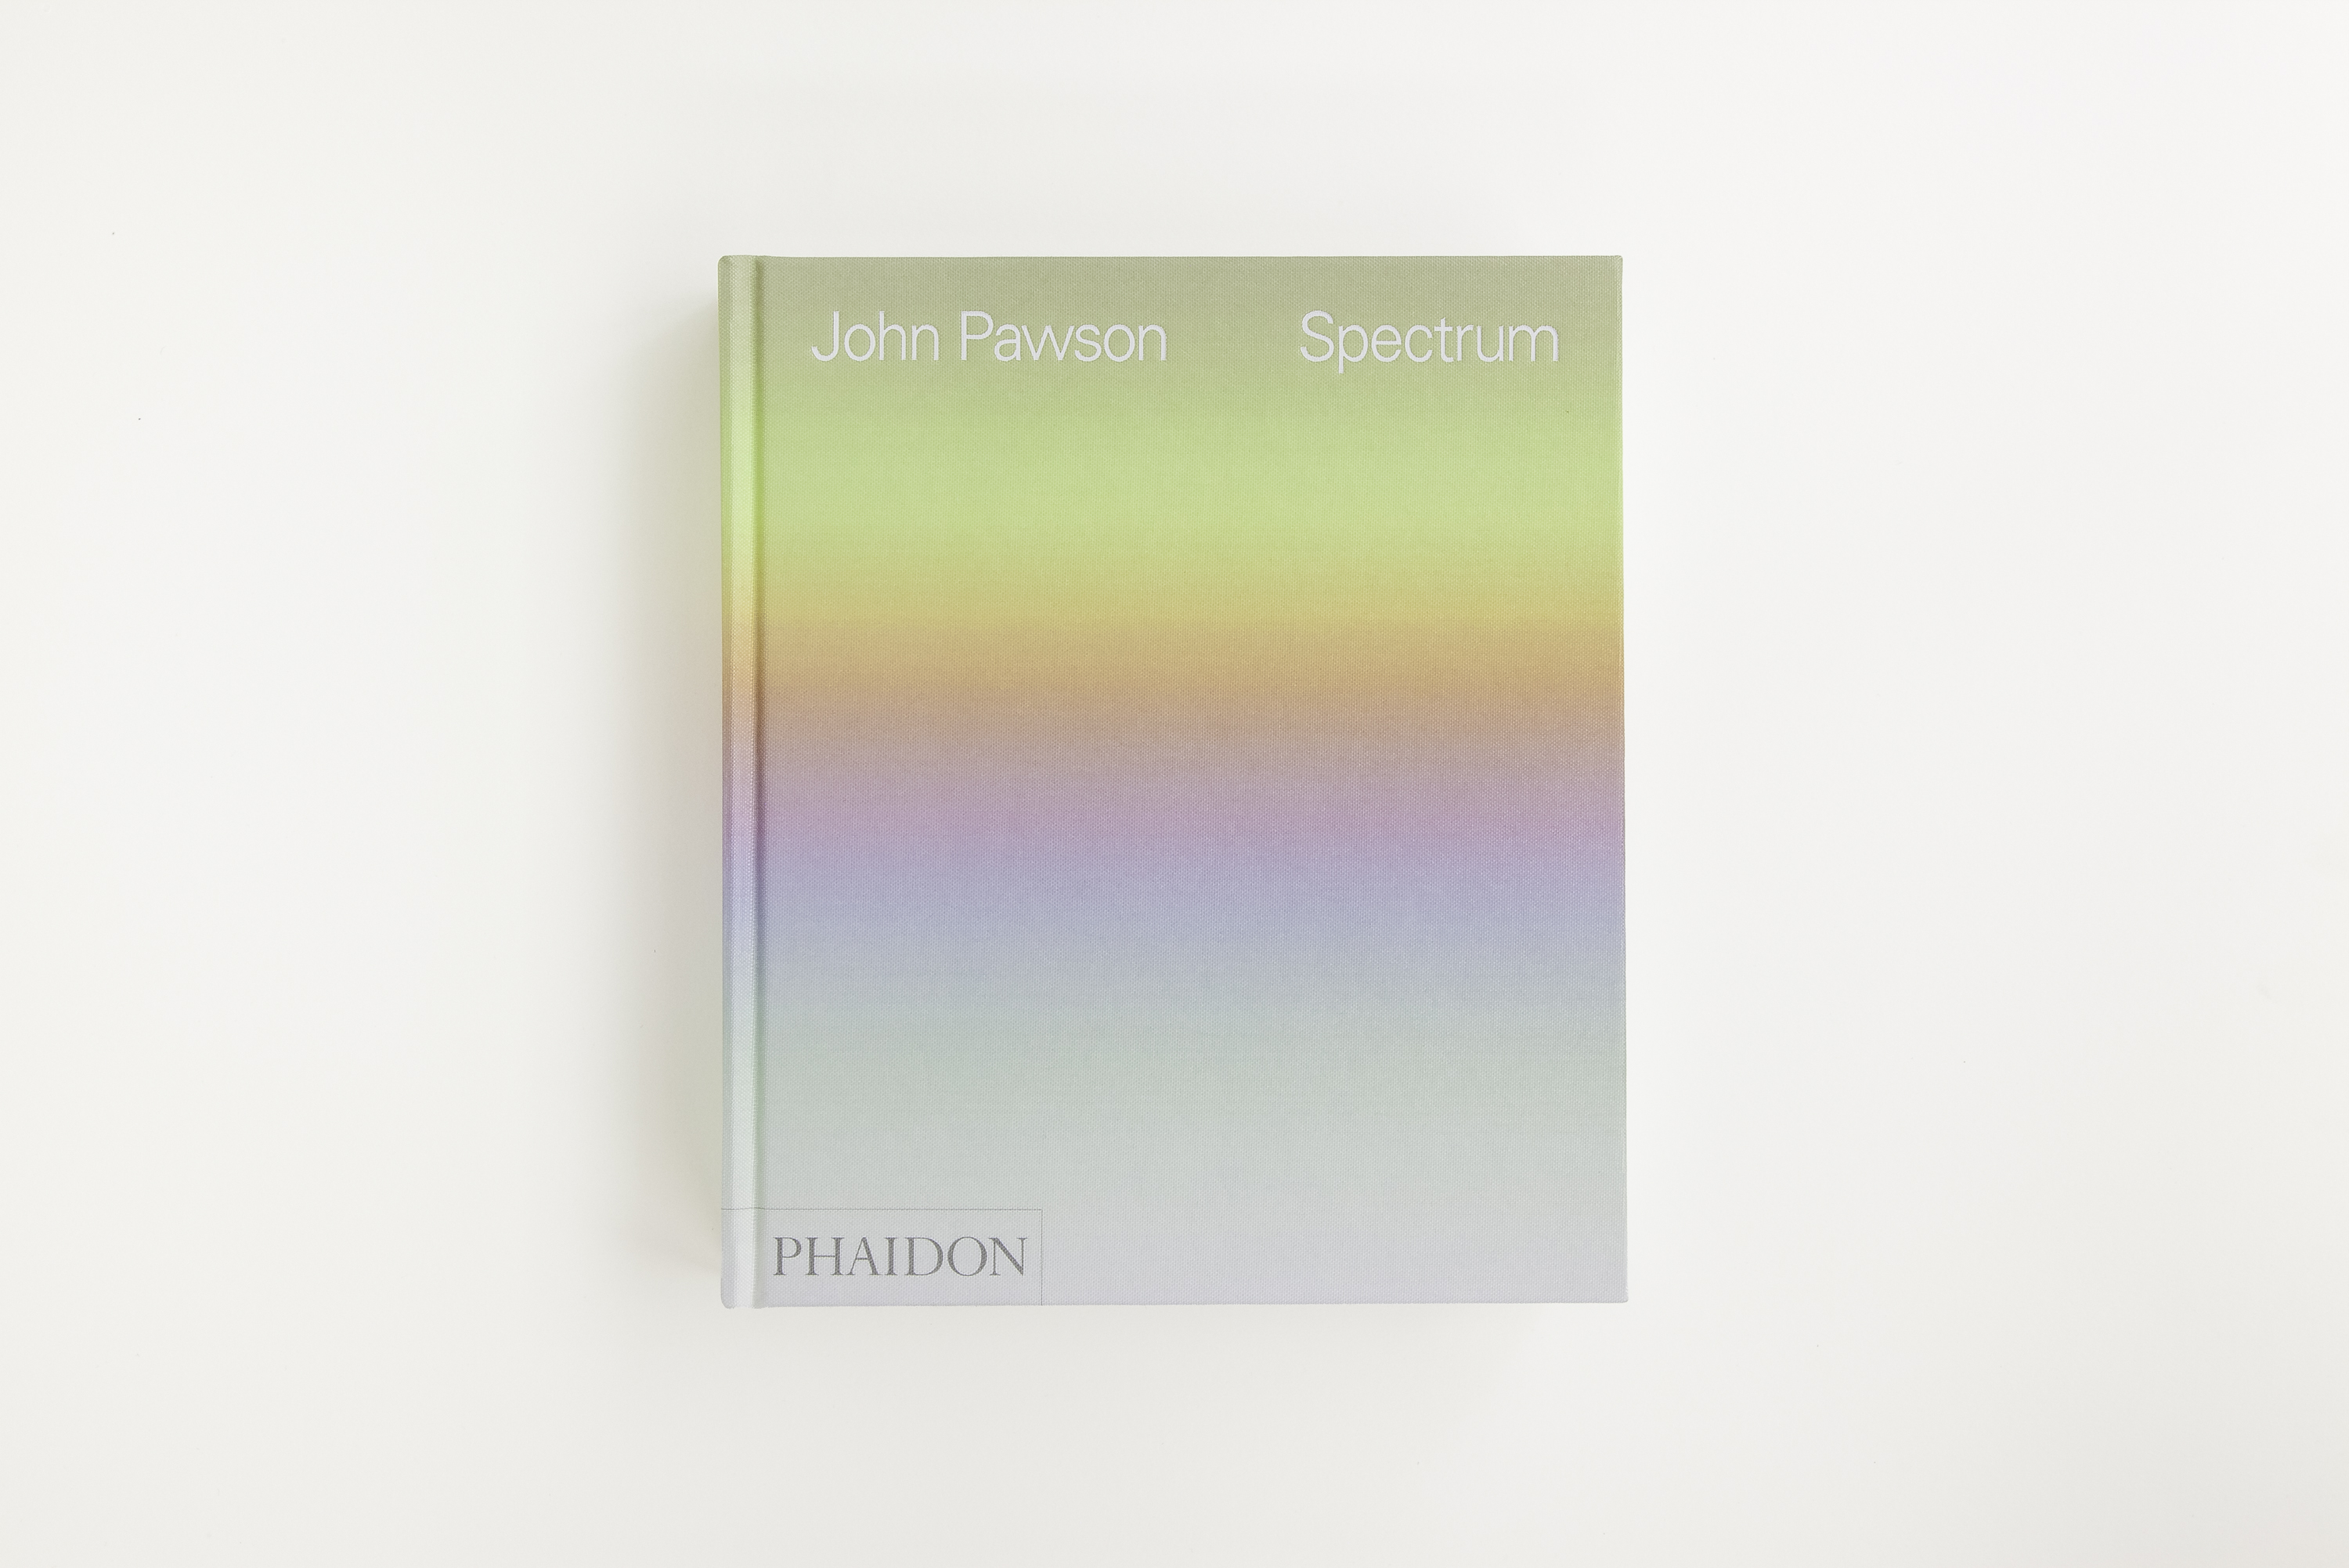 John Pawson - Spectrum3000 x 2003